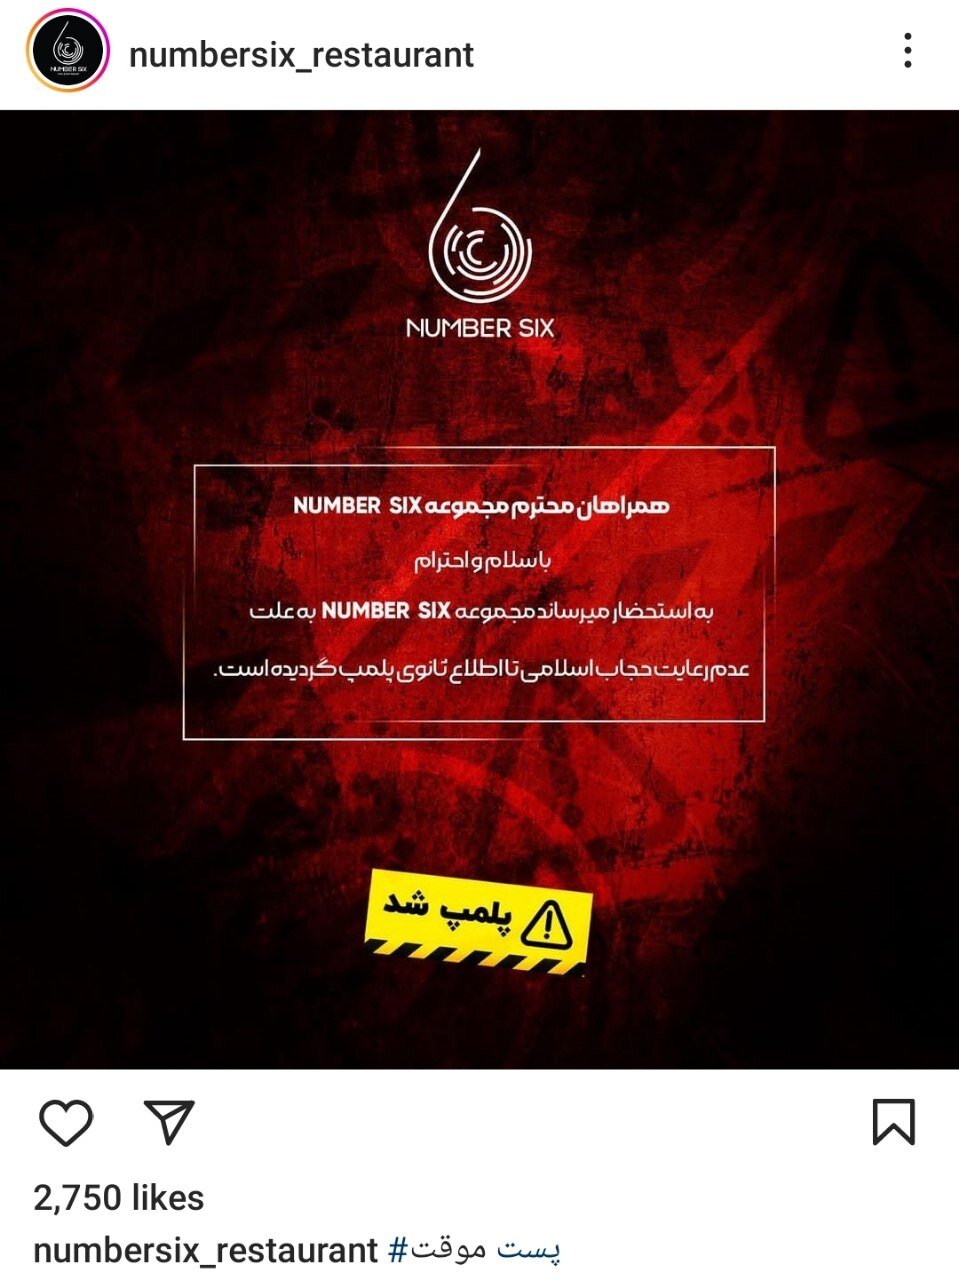 رستوران کریم باقری پلمپ شد/ عکس